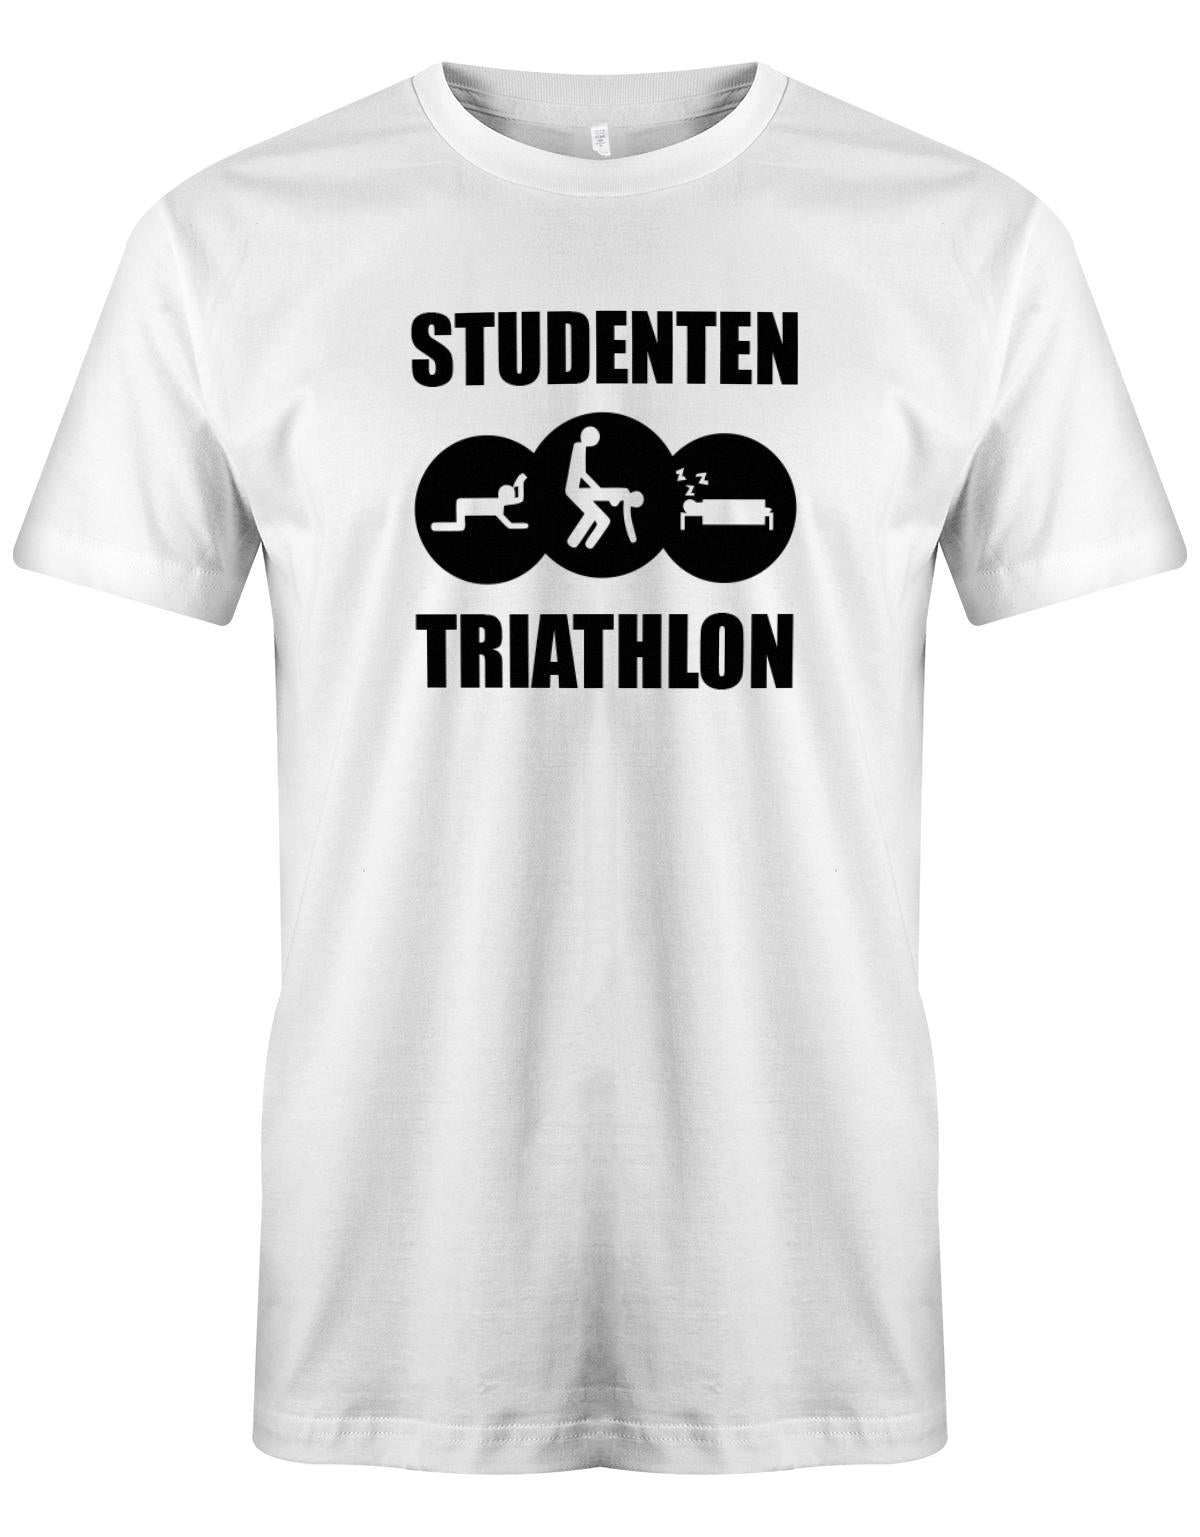 Studenten-Triahtlon-Herren-Shirt-Weiss